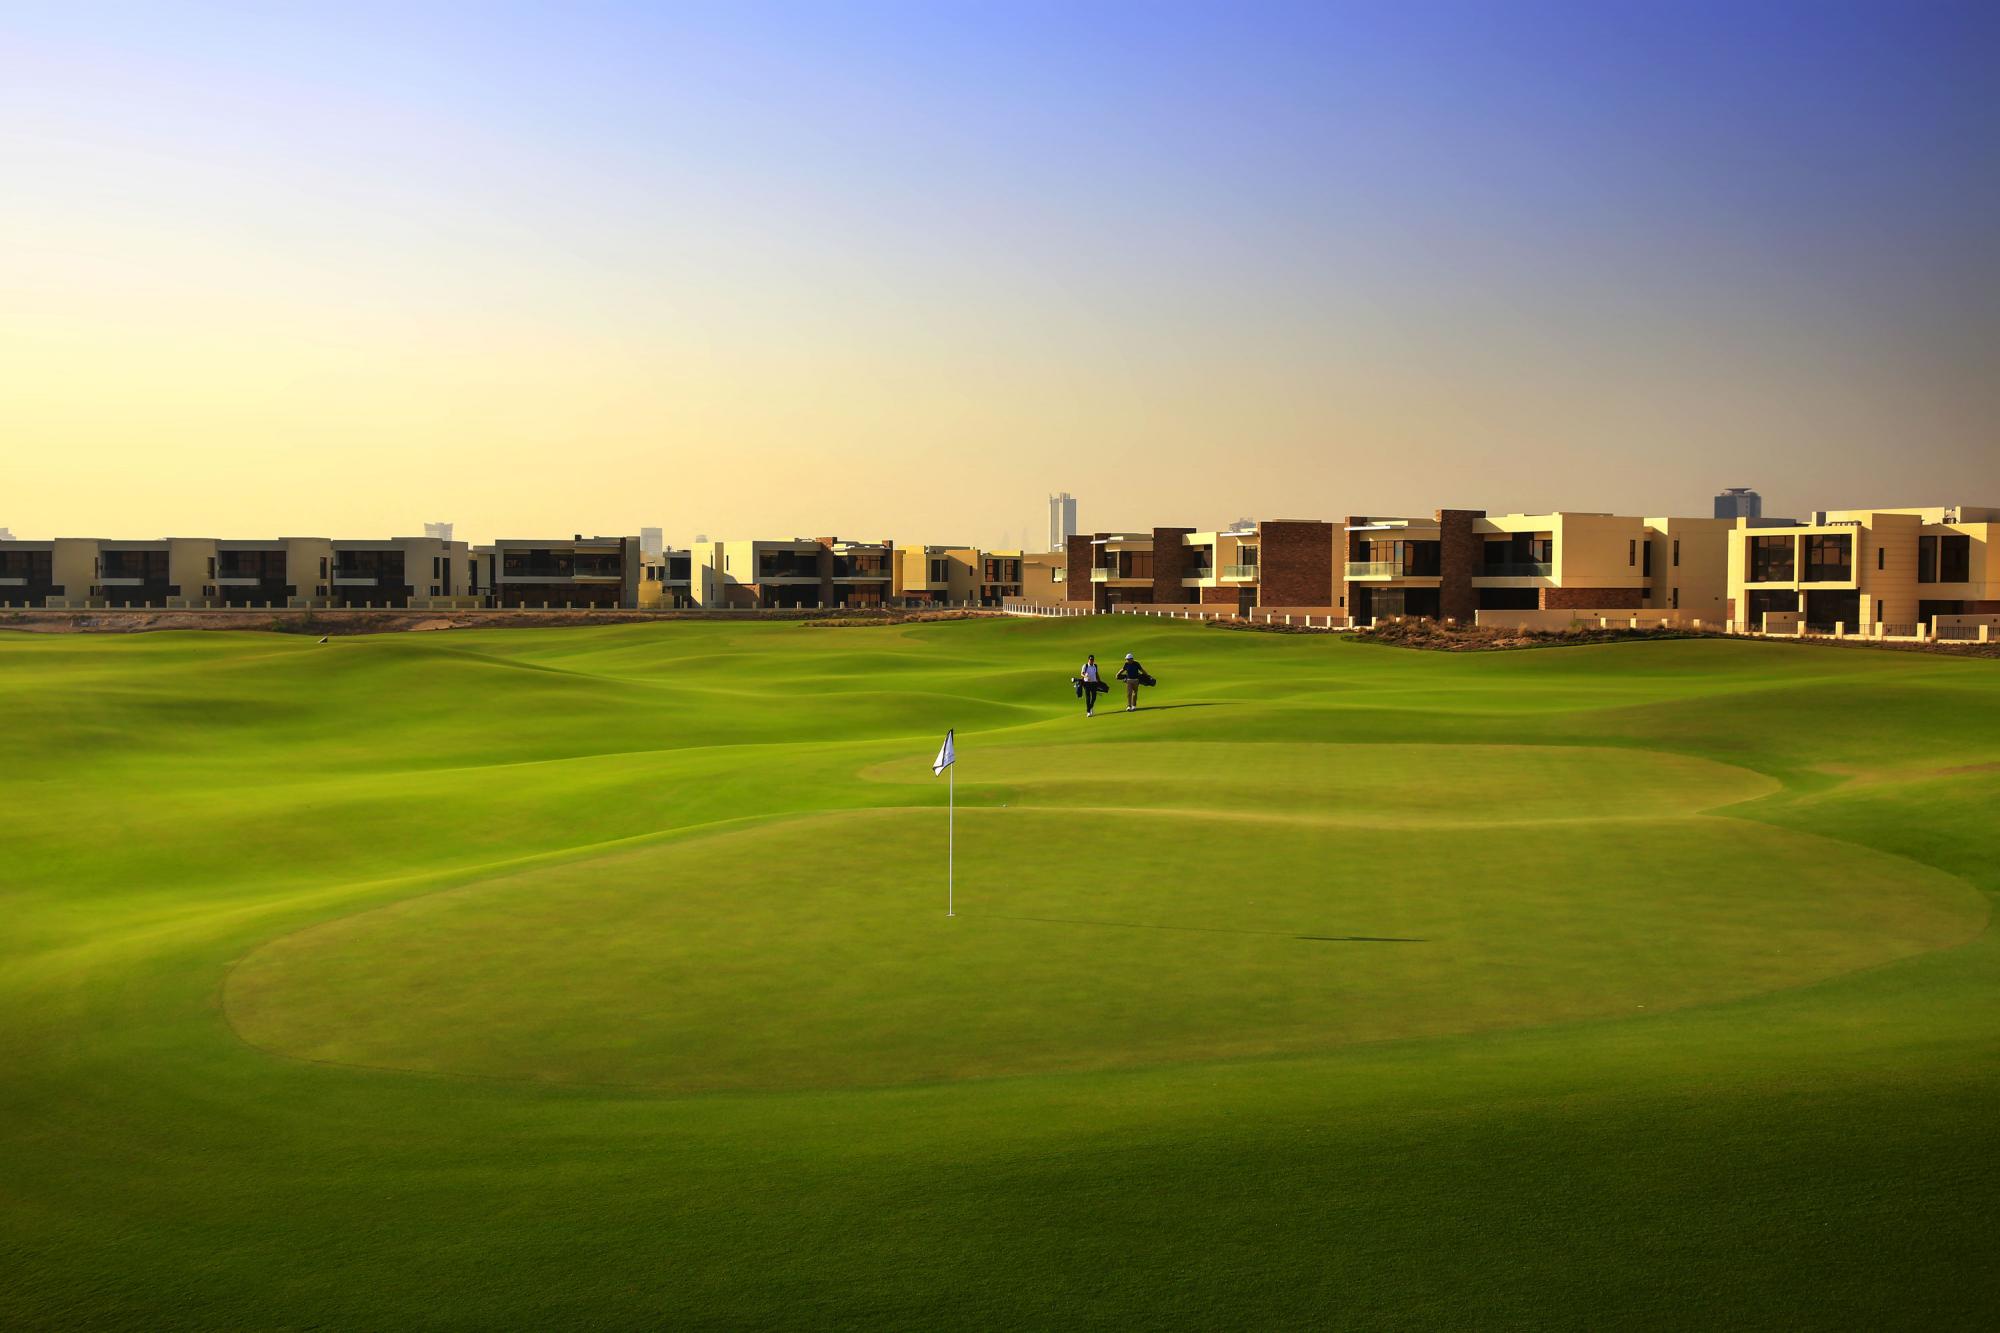 Trump International Golf Club Dubai hosts some of the finest golf course within Dubai